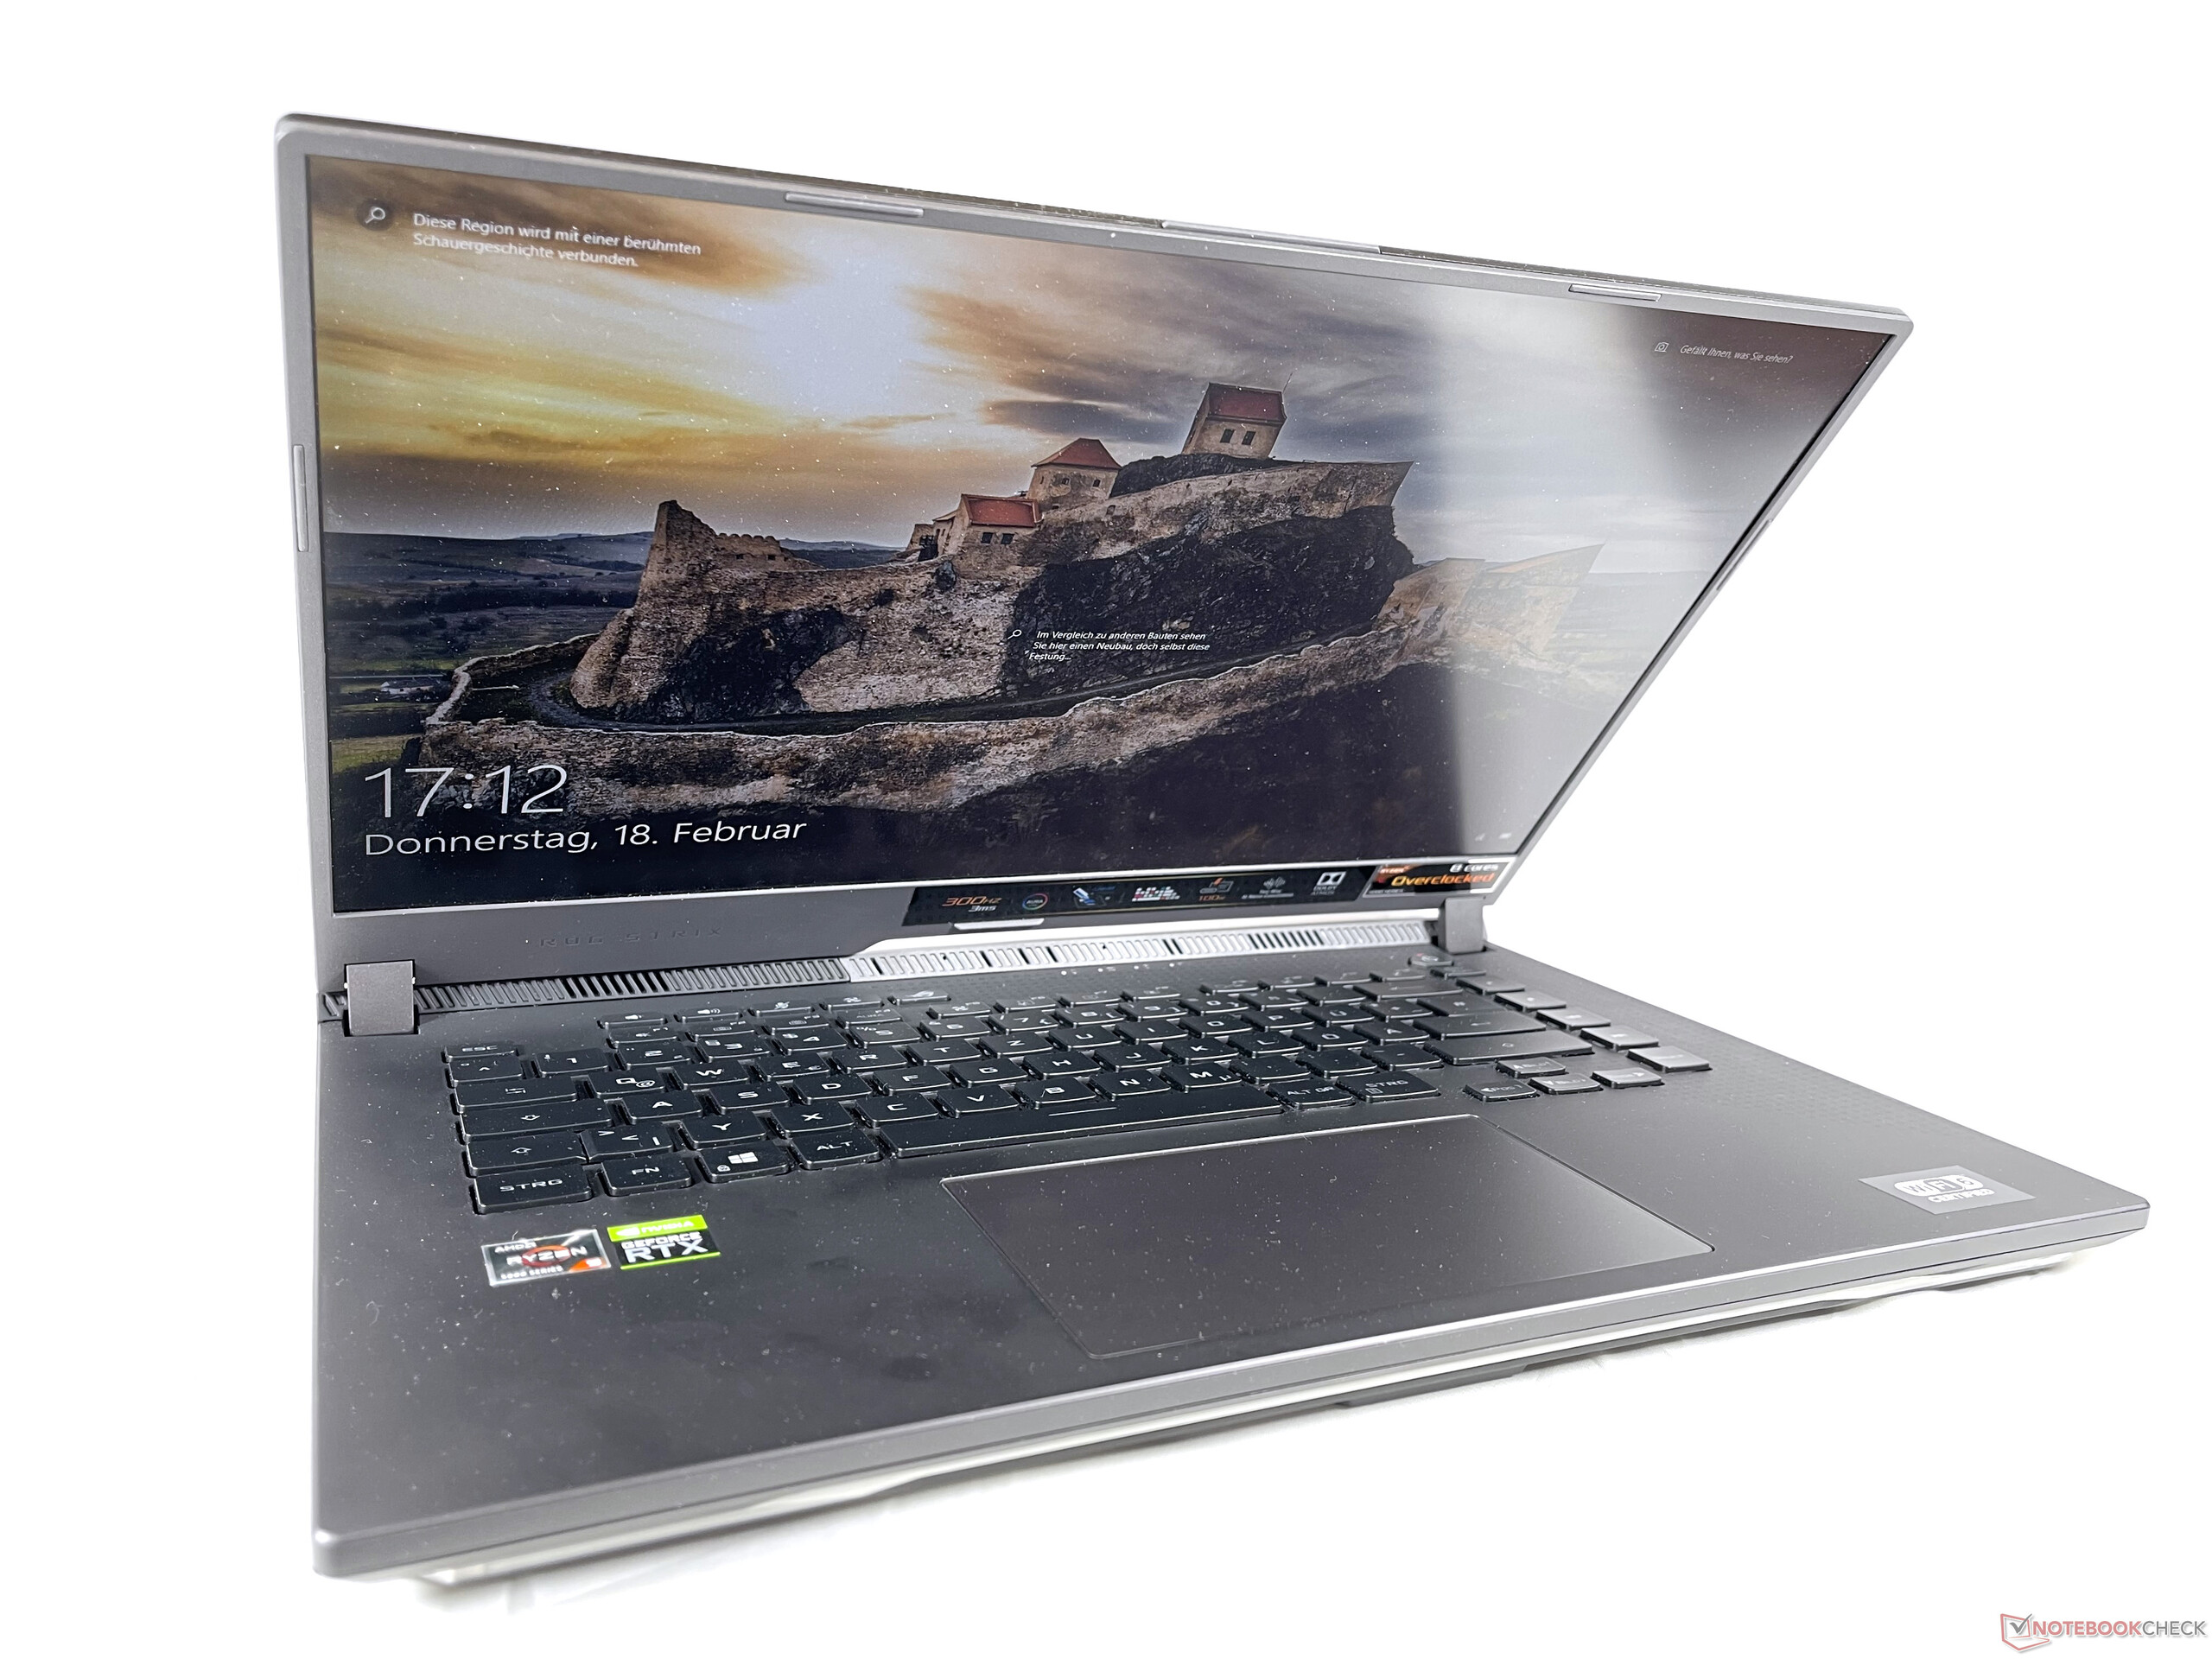 ASUS ROG Strix Scar 15 Gaming Laptop, 15.6 300Hz IPS Type FHD Display,  NVIDIA GeForce RTX 3080, AMD Ryzen 9 5900HX, 16GB DDR4, 1TB SSD